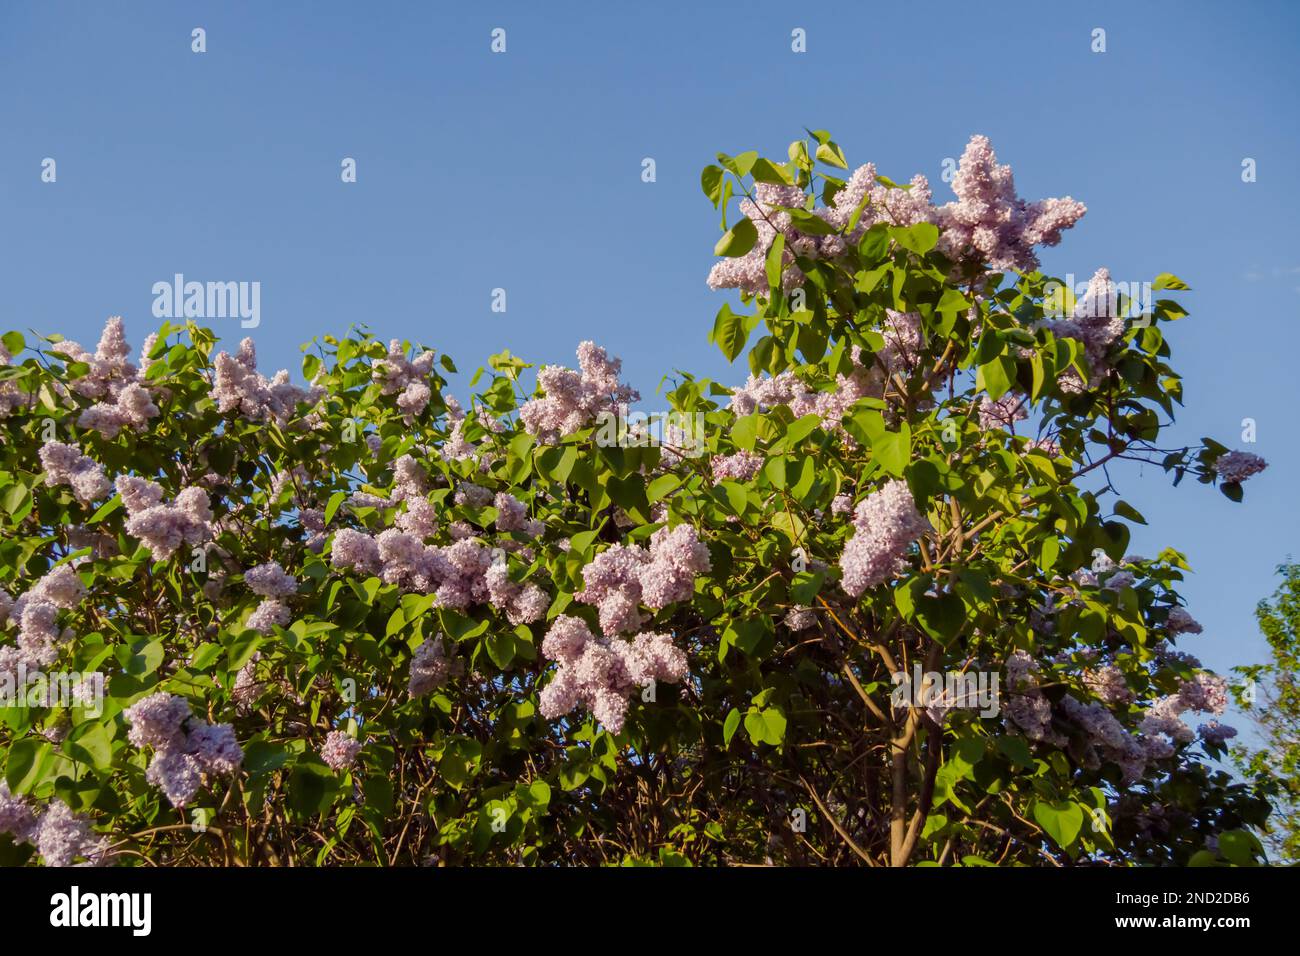 Syringa vulgaris, common lilac bushes against blue sky Stock Photo